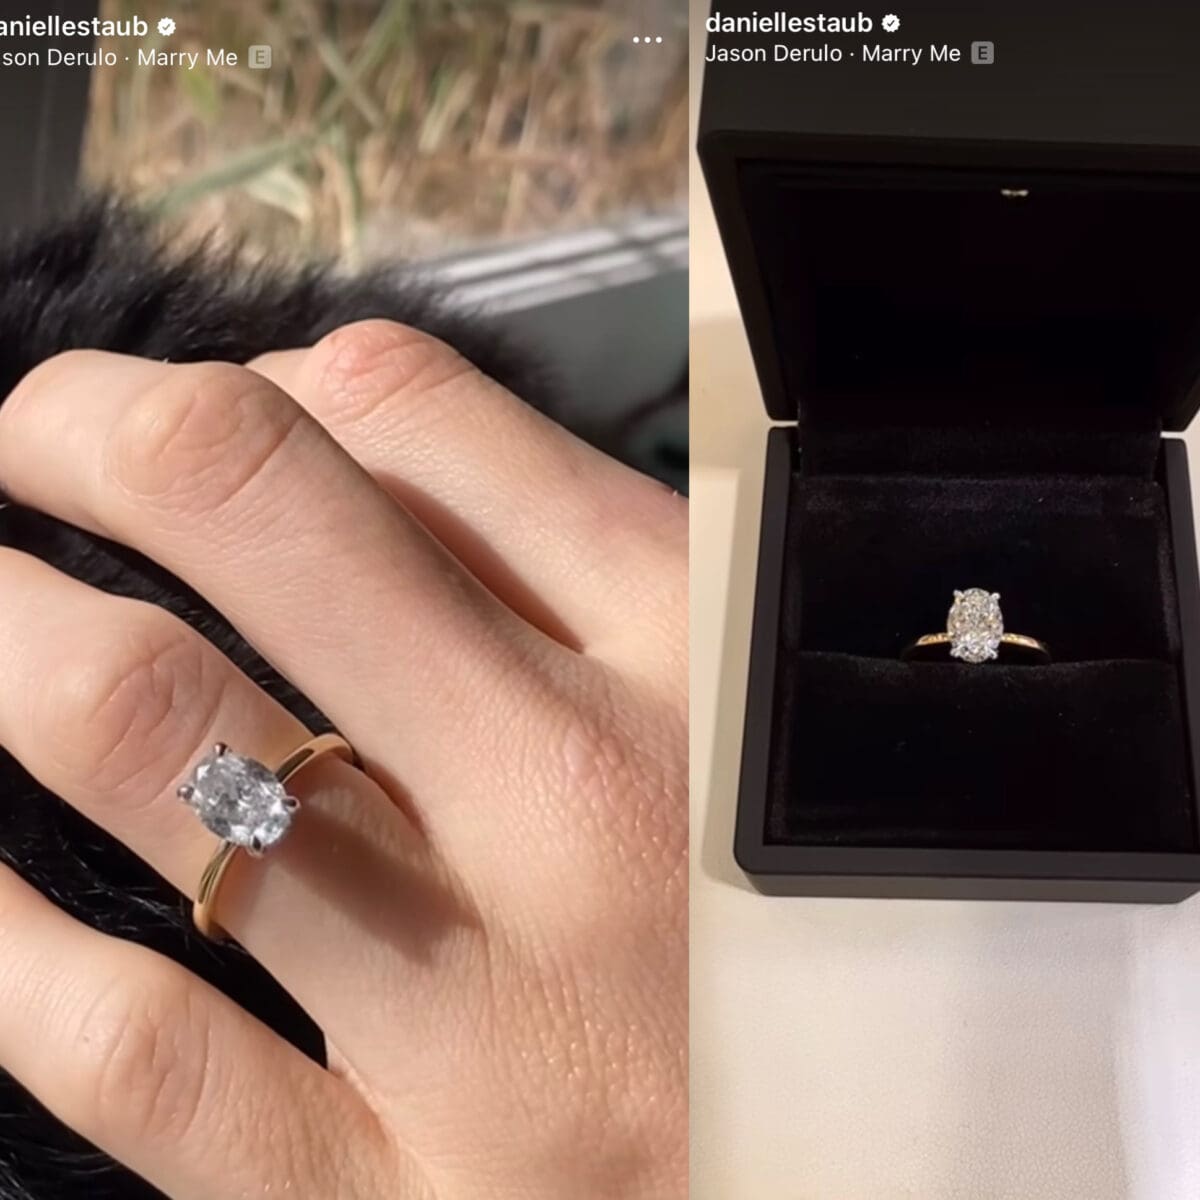 Christine Staub's engagement ring.